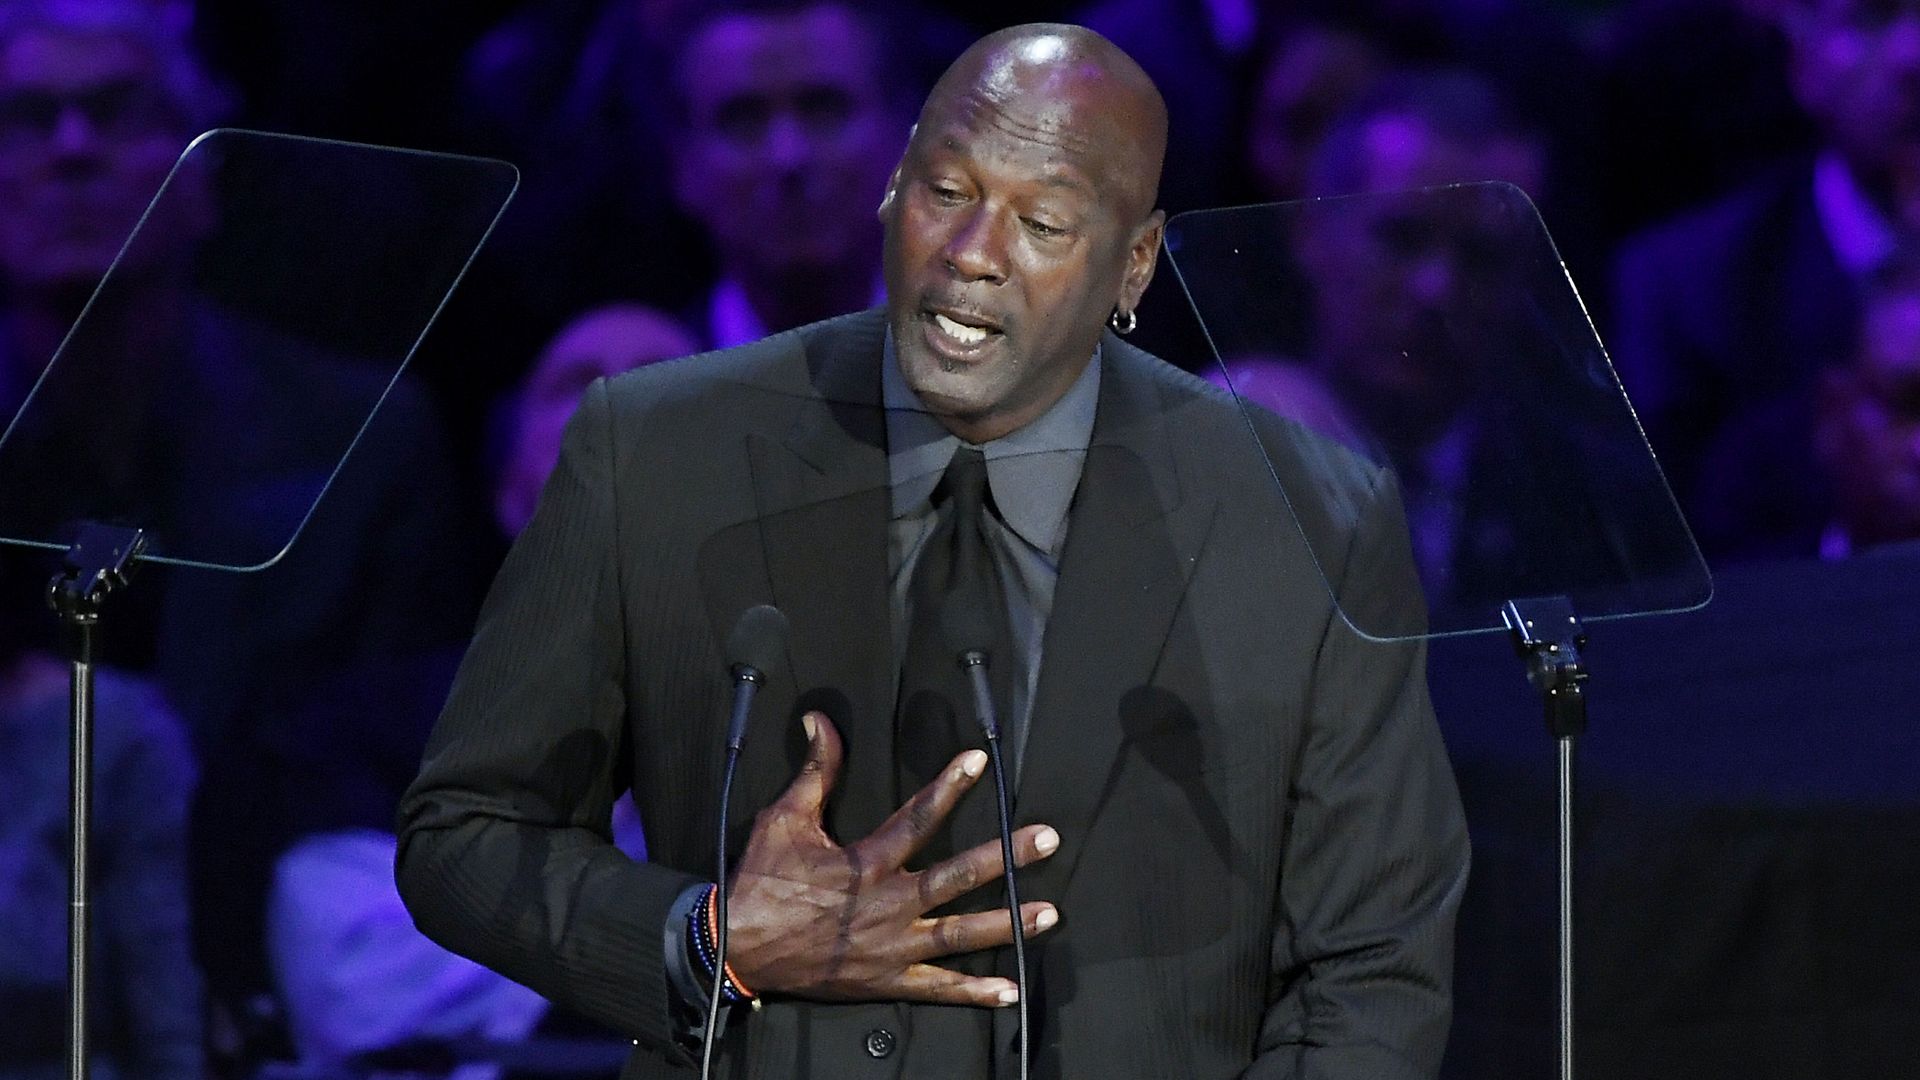 Michael Jordan in a suit and tie